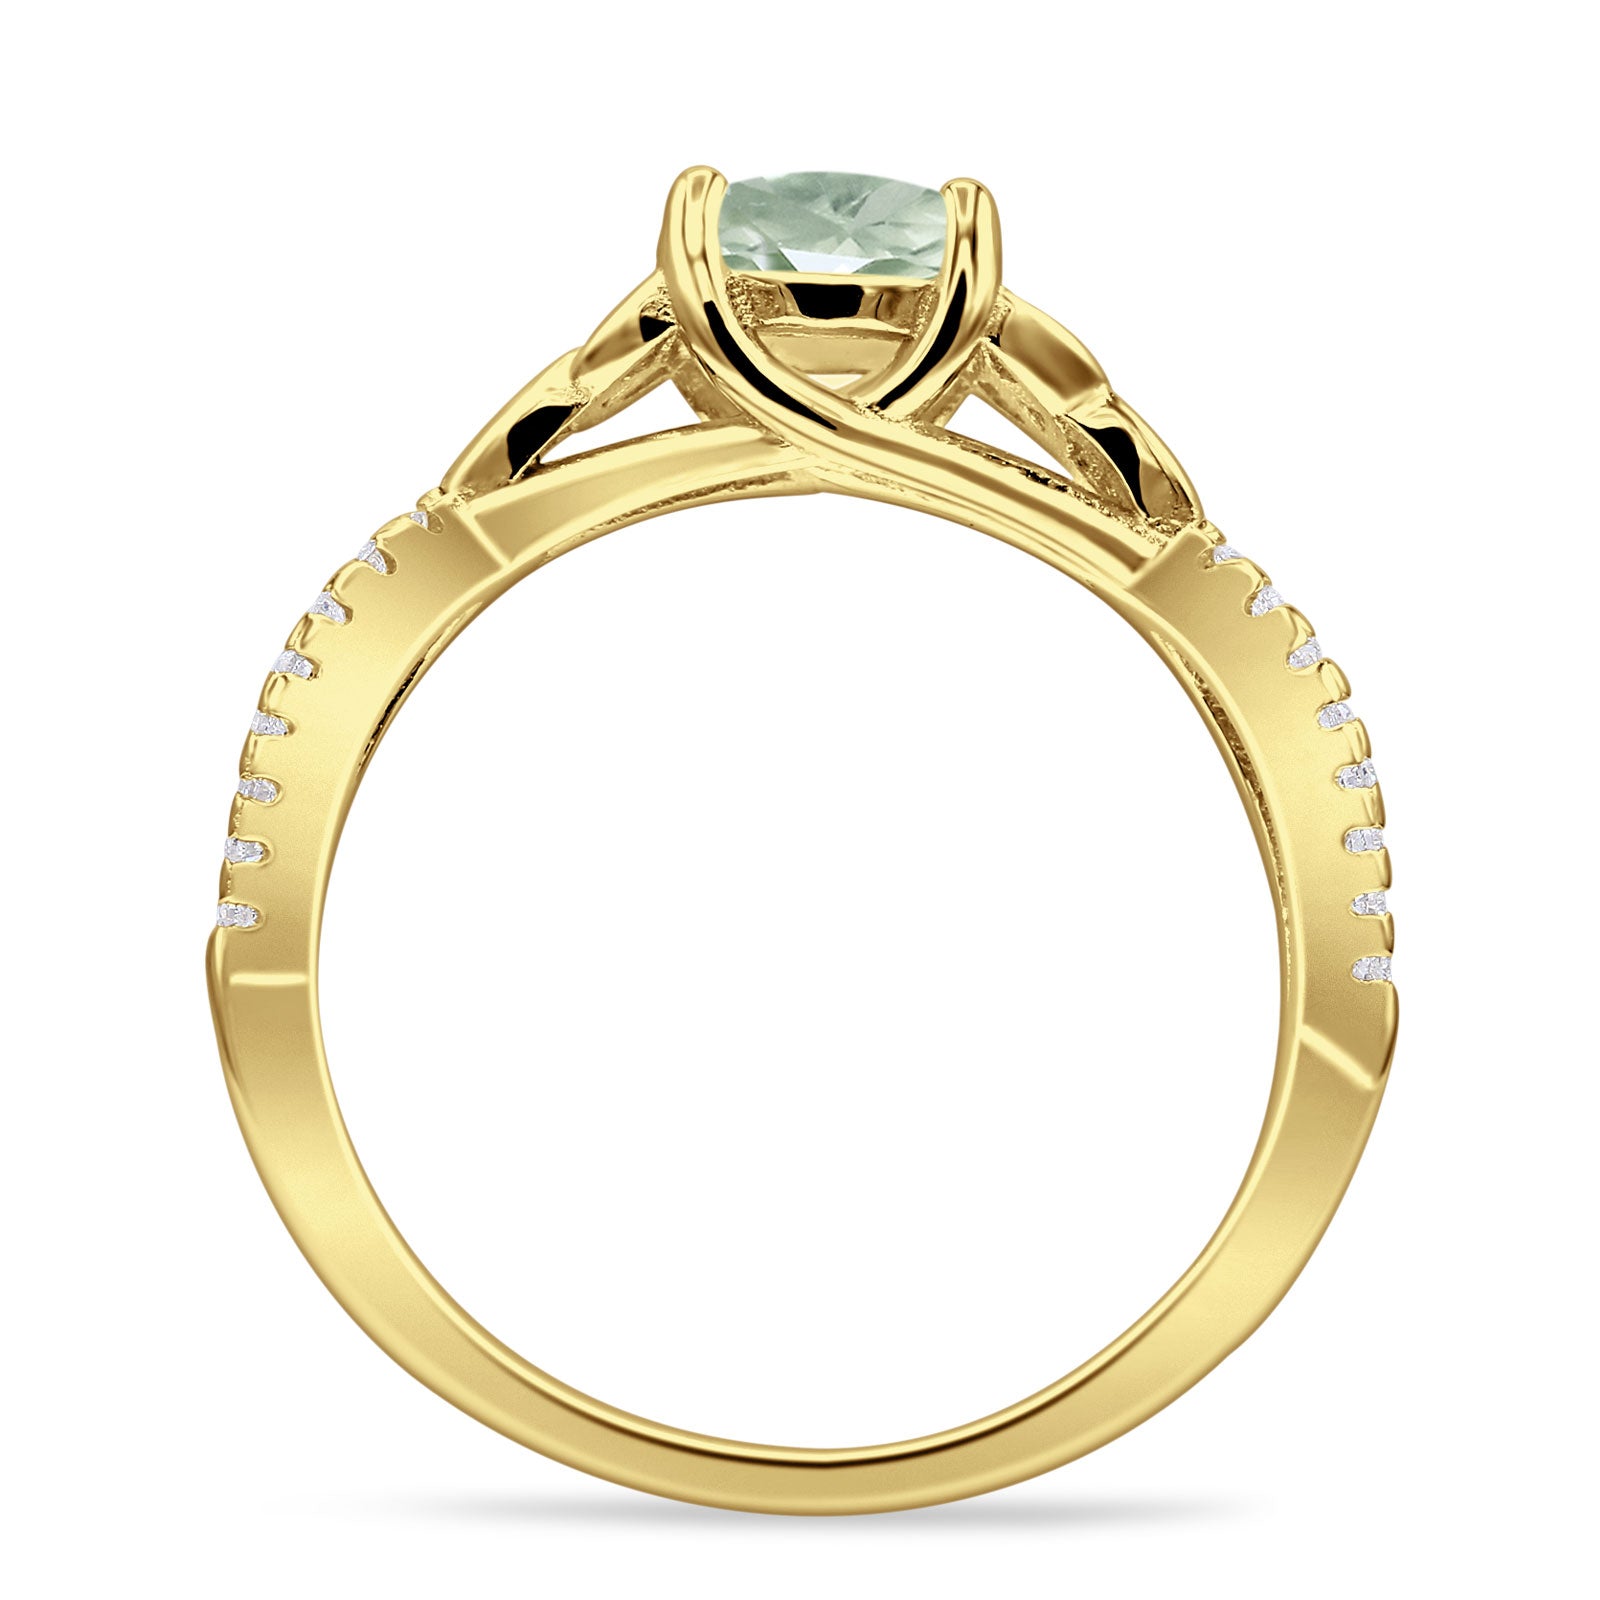 Round Cetlic Trinity Vintage Style Natural Green Amethyst Prasiolite Ring 925 Sterling Silver